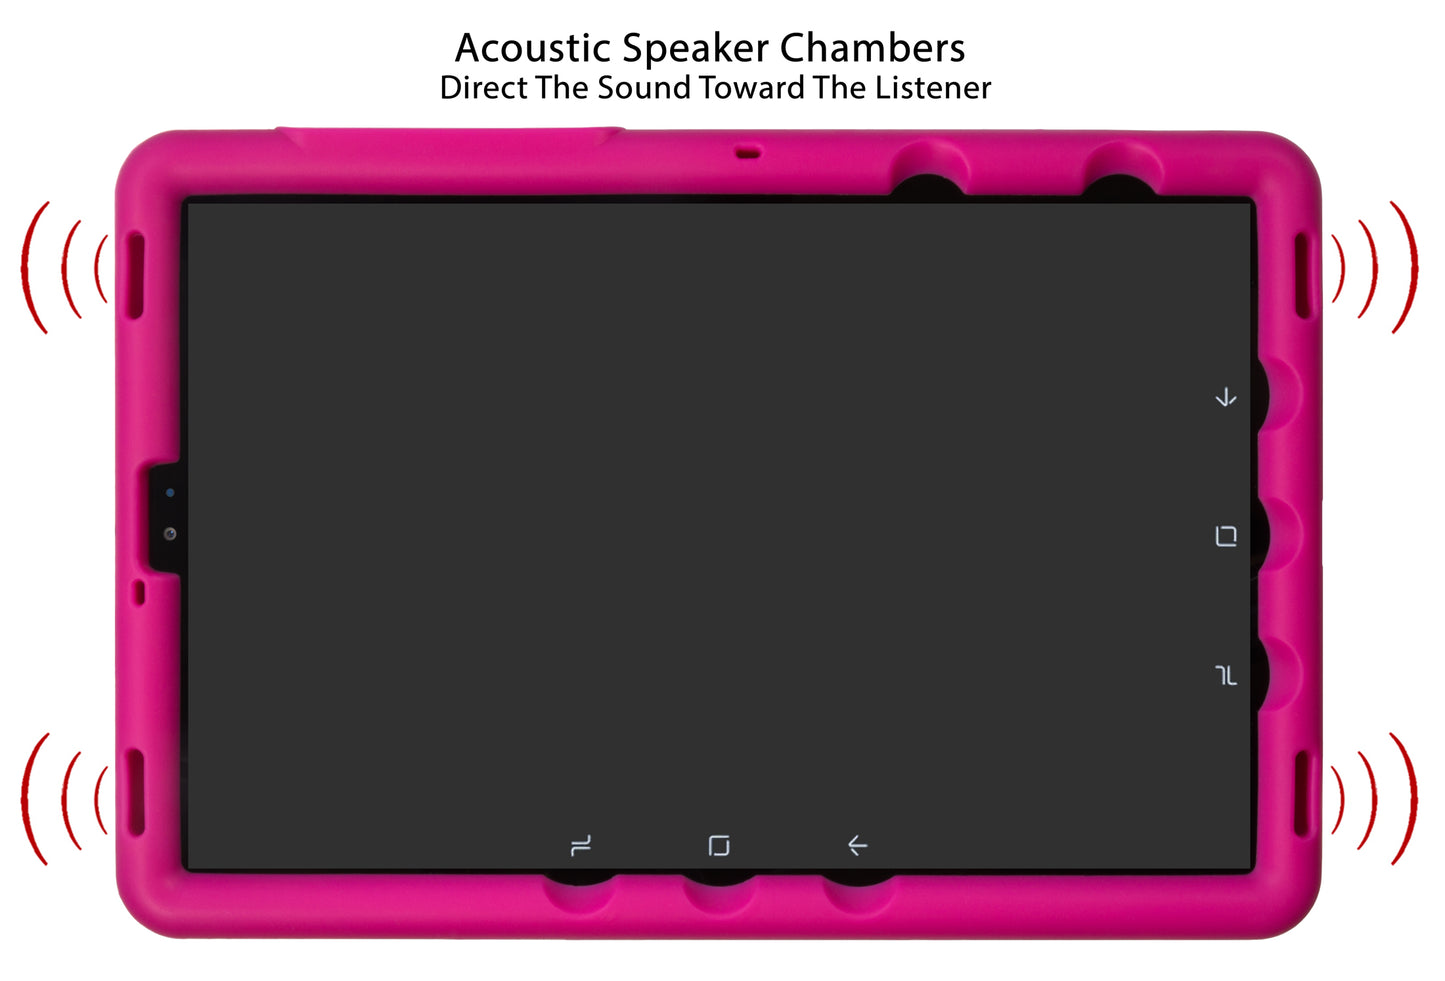 Bobj Rugged Tablet Case for Samsung Galaxy Tab S5e (SM-T720 SM-T725 SM-T727) - Rockin' Raspberry